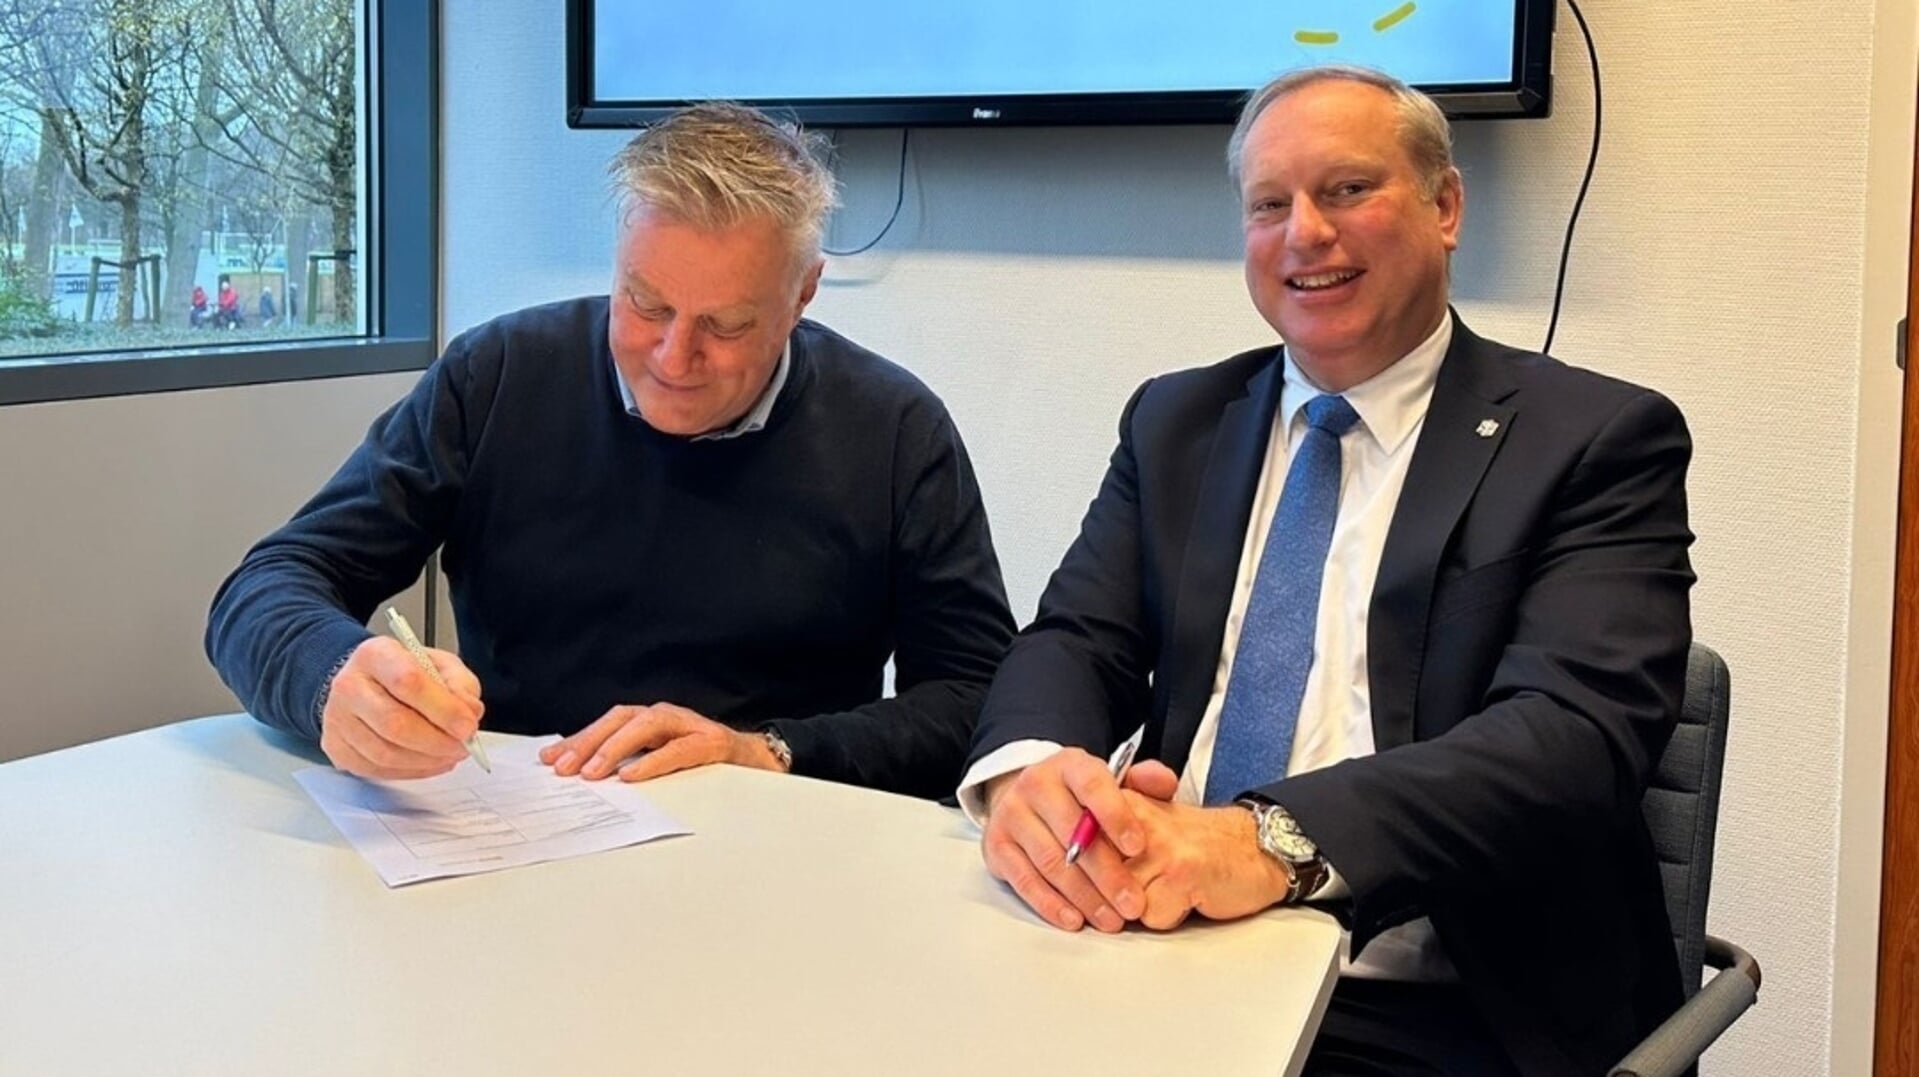 Wethouder Leon Hoek van Lansingerland (links) en wethouder Peter Hennevanger ondertekenen de overeenkomst.